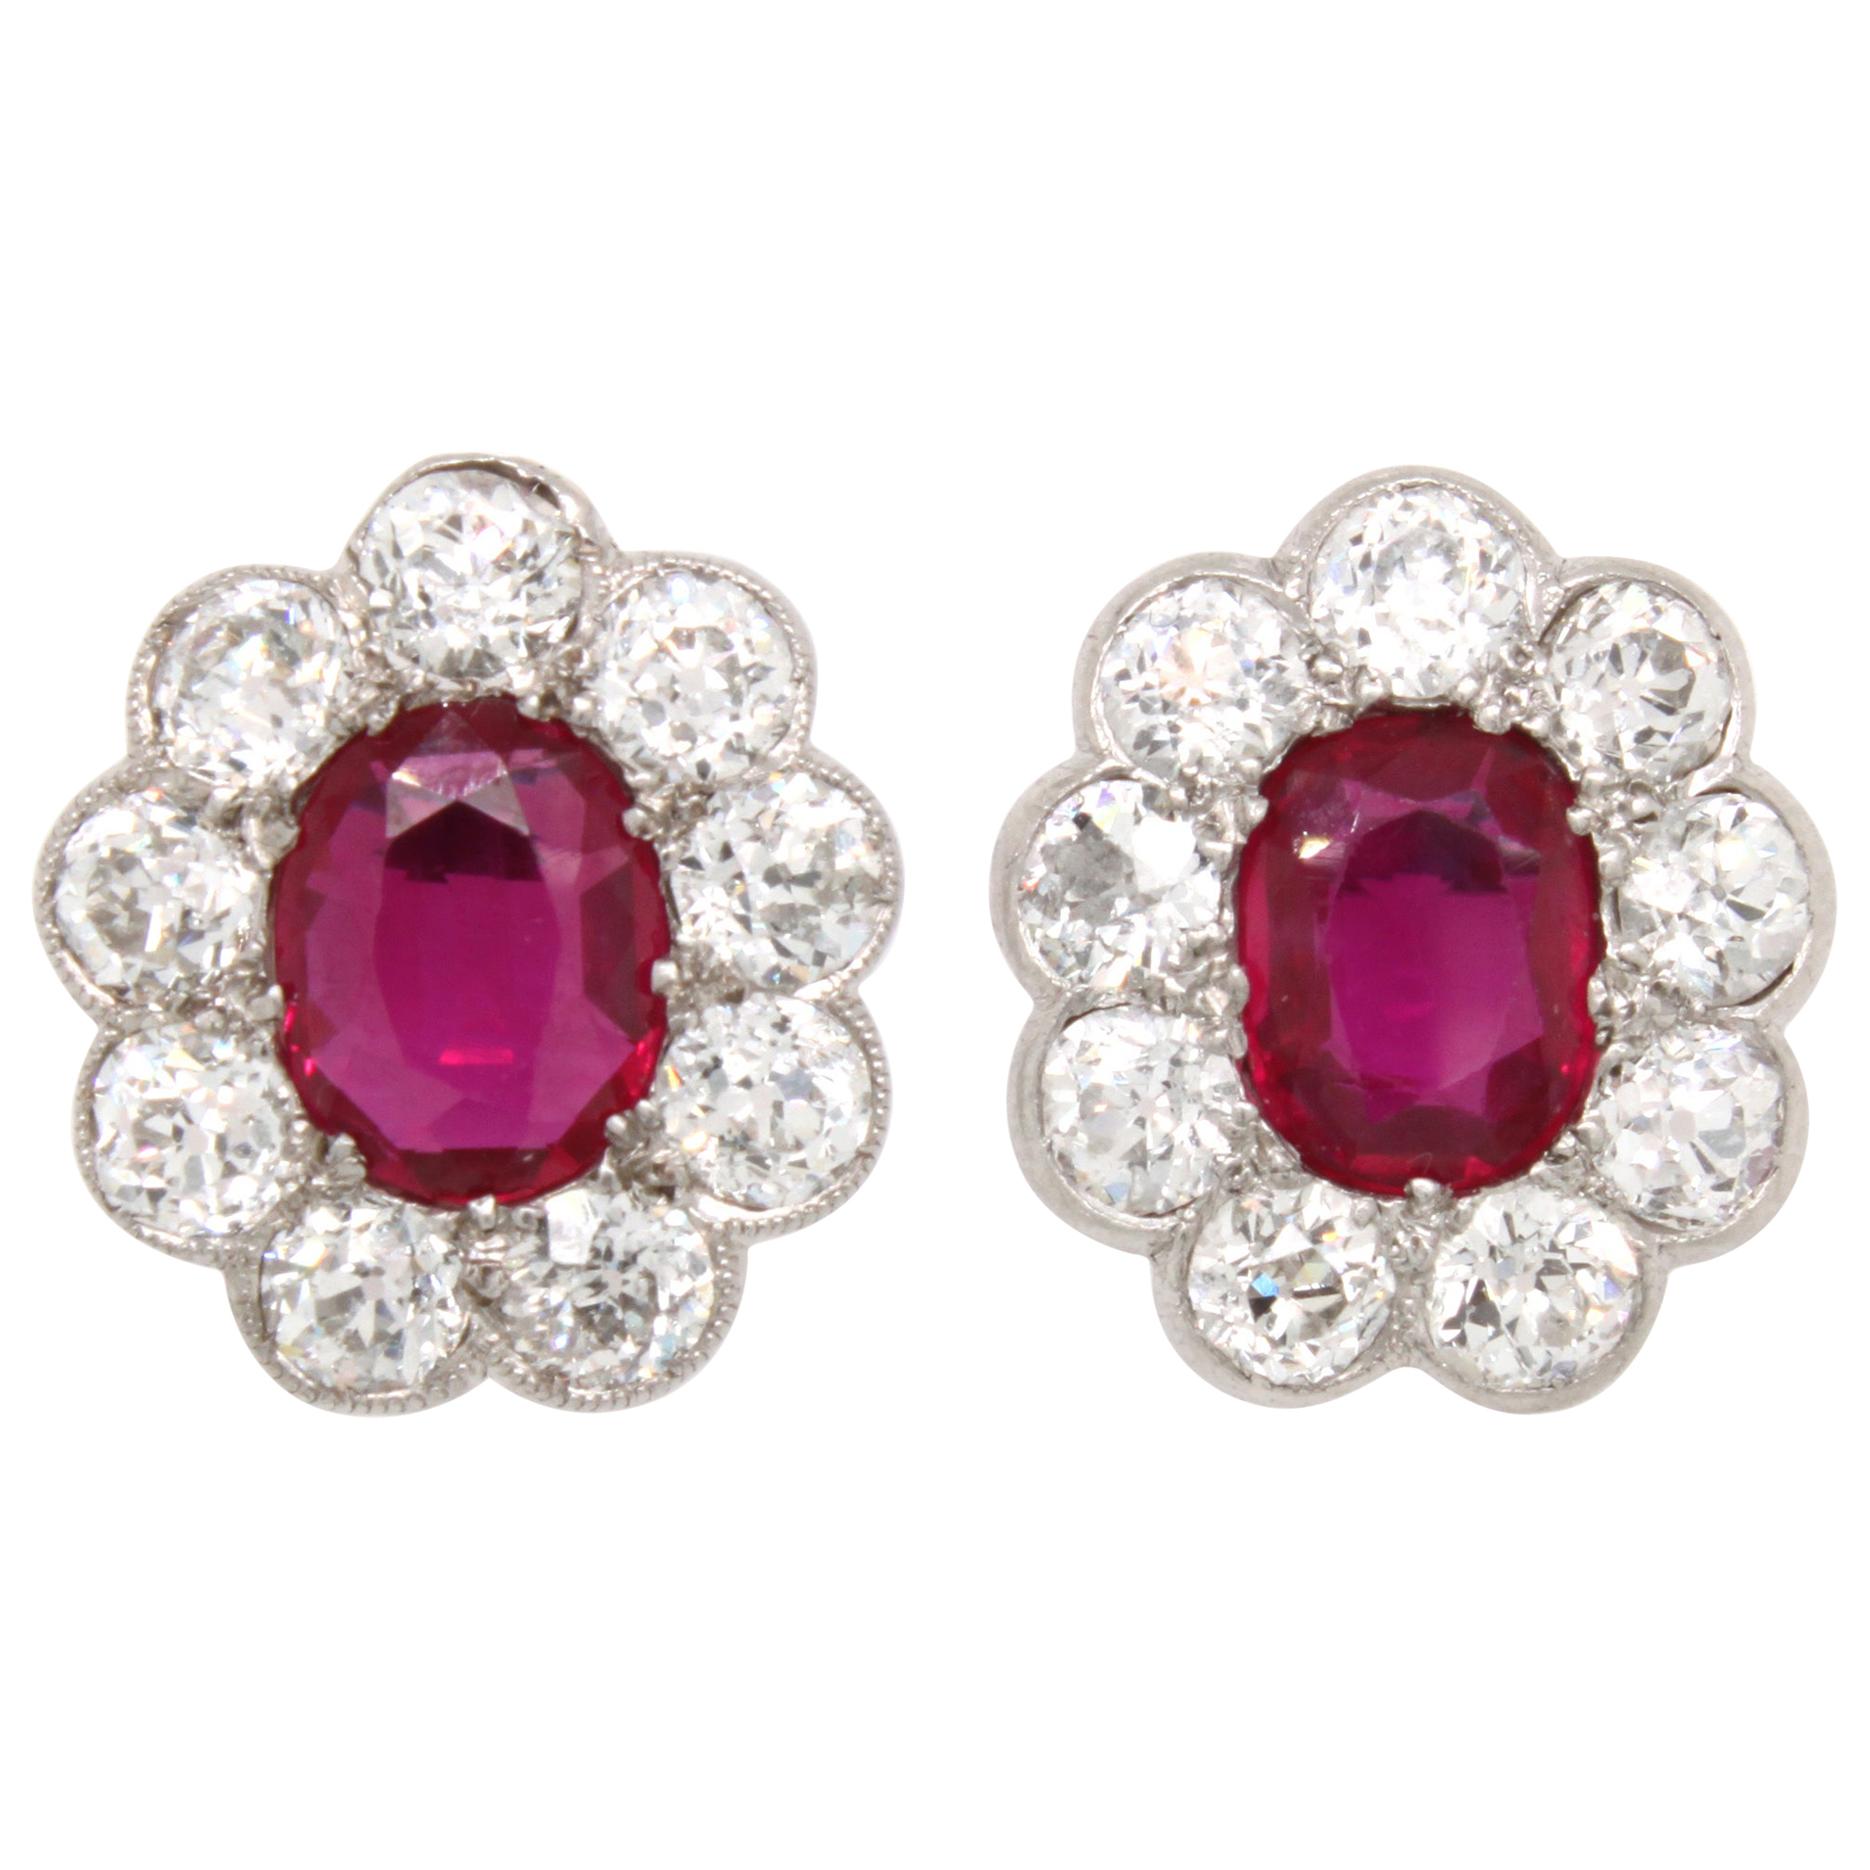 Edwardian Burmese Ruby and Diamond Cluster Earrings, 1910s